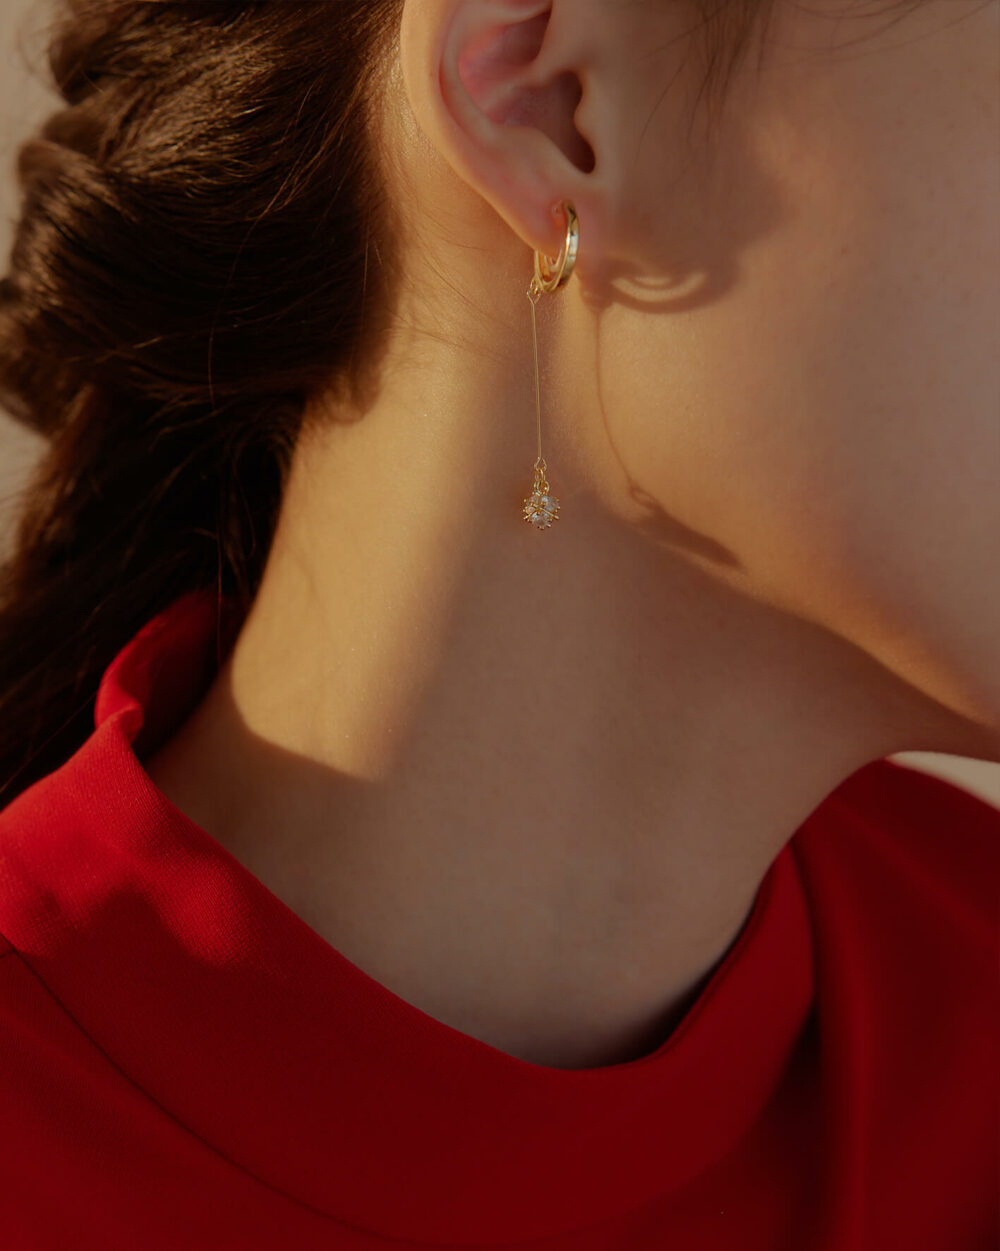 Eco安珂,韓國飾品,韓國耳環,耳針式耳環,矽膠夾耳環,透明耳夾耳環,無痛耳夾耳環,鋯石耳環,垂墜矽膠夾耳環